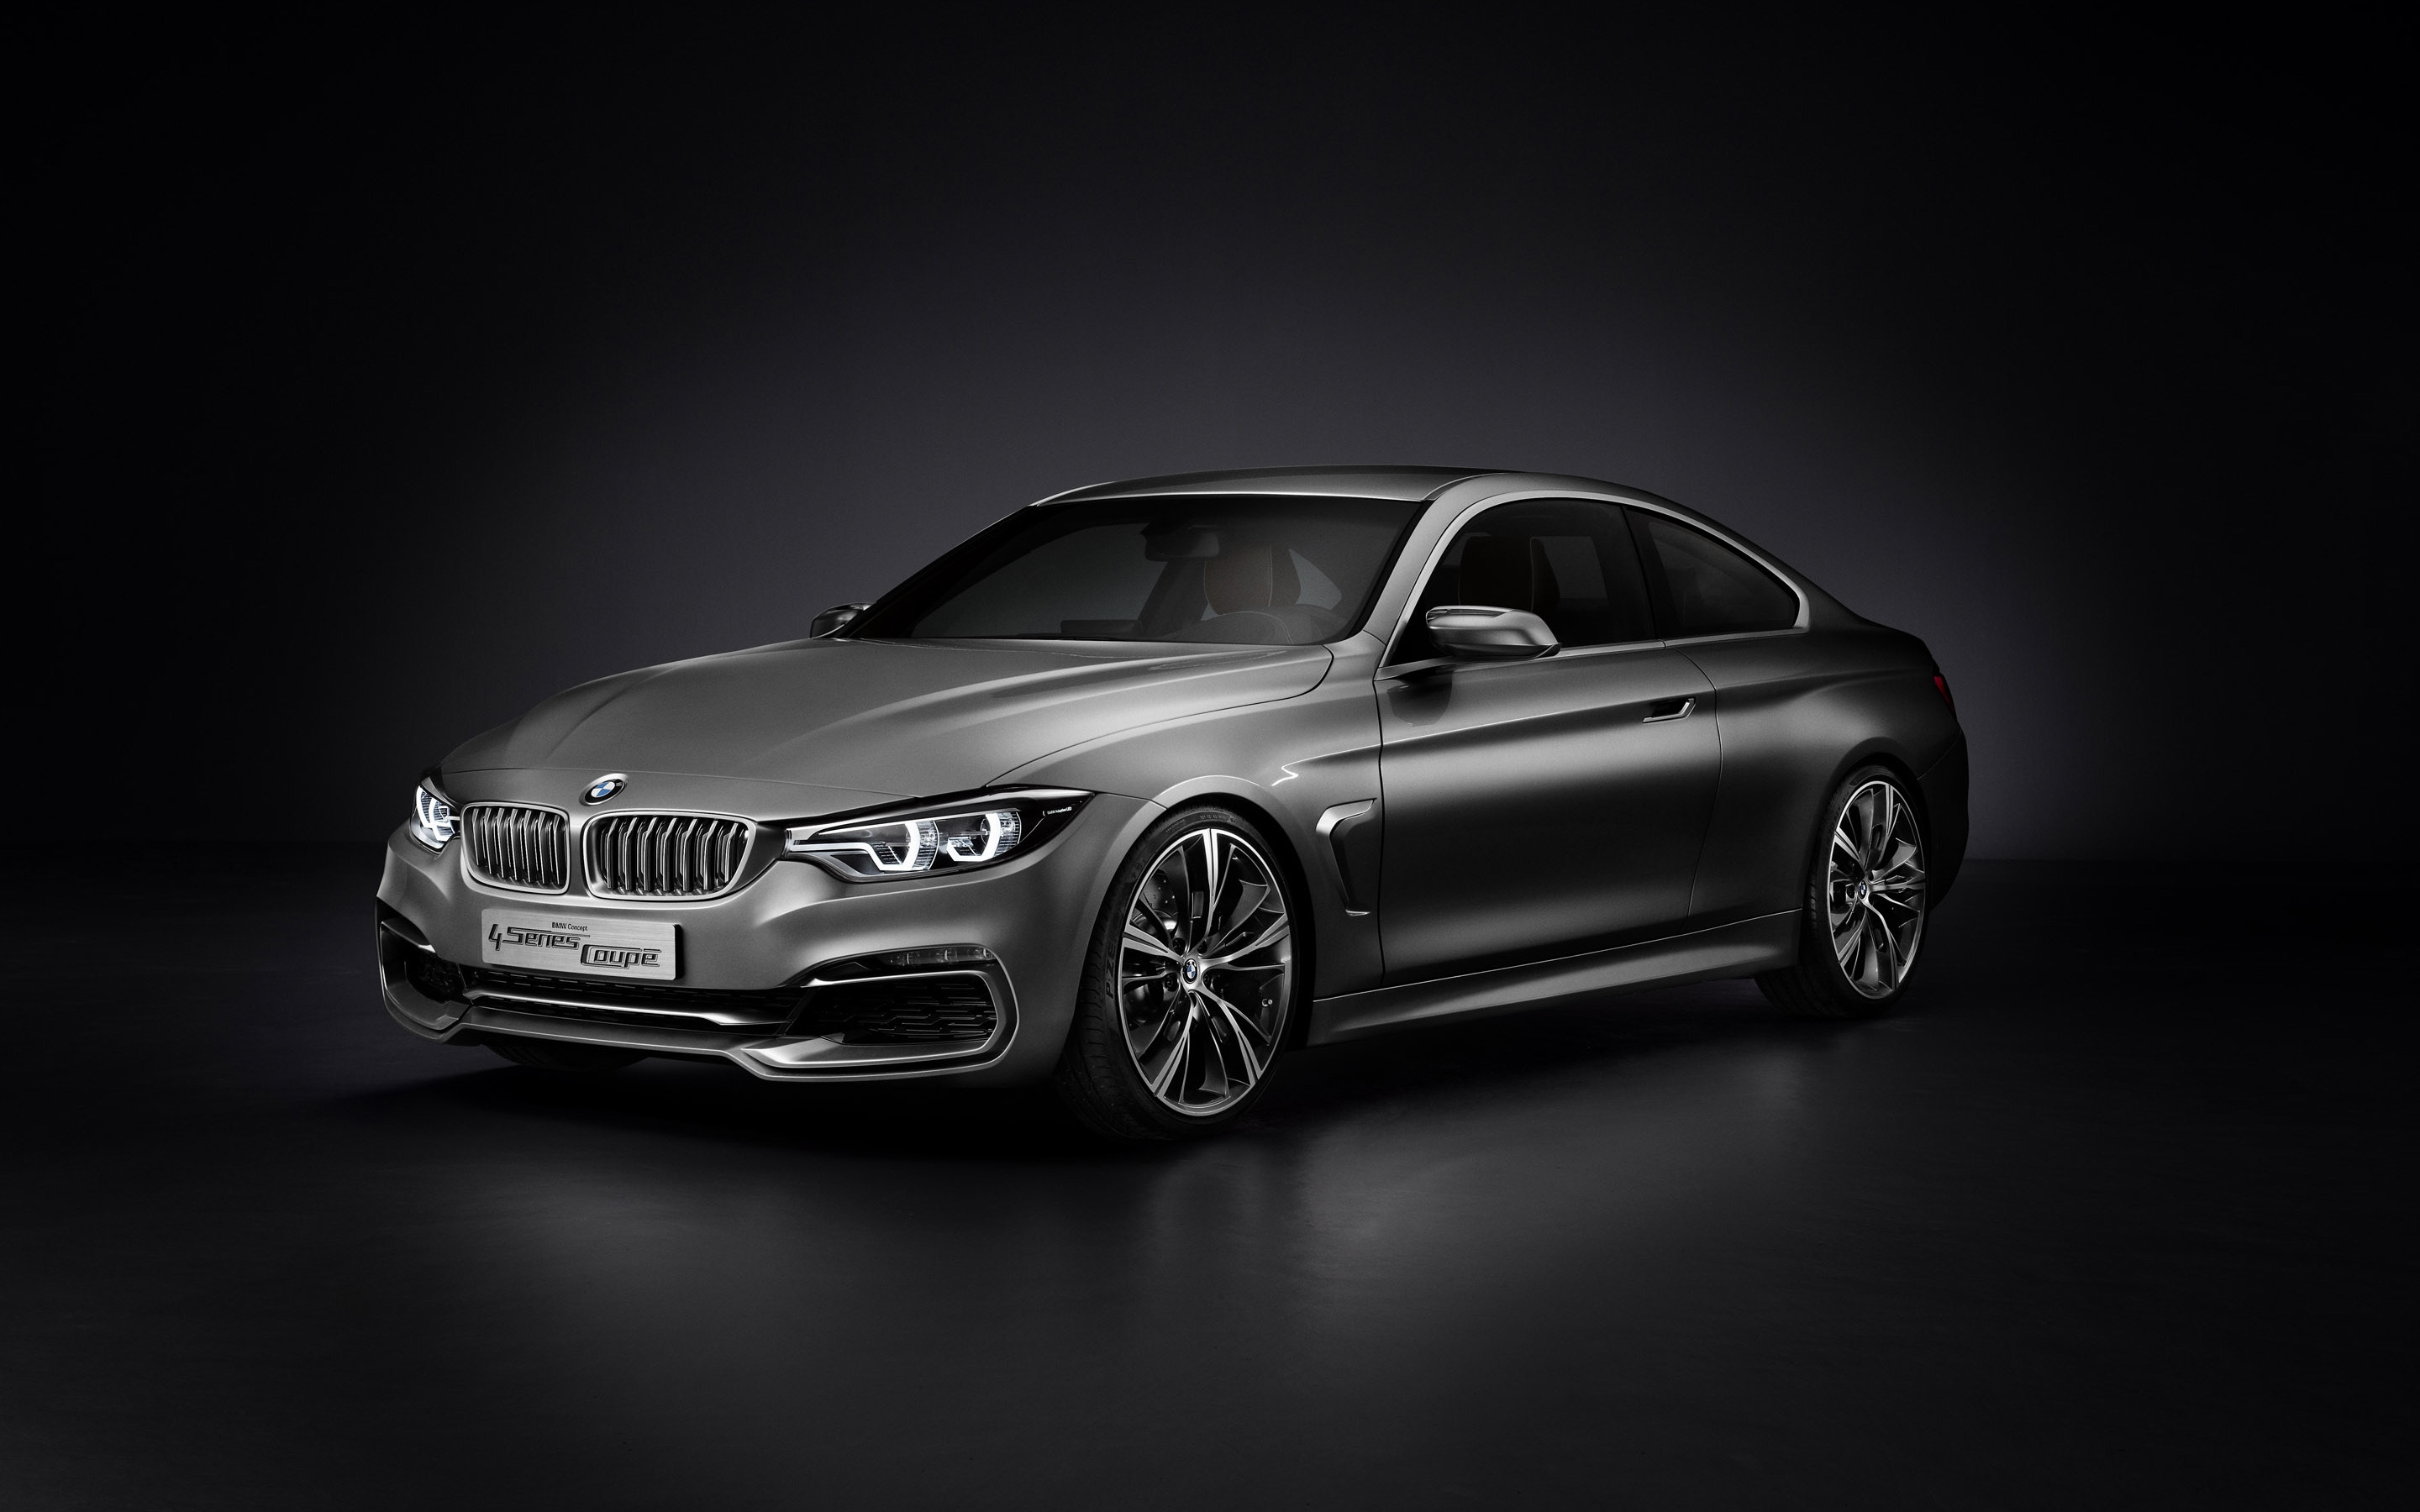 BMW 4 Series Coupe Concept Studio for 2880 x 1800 Retina Display resolution